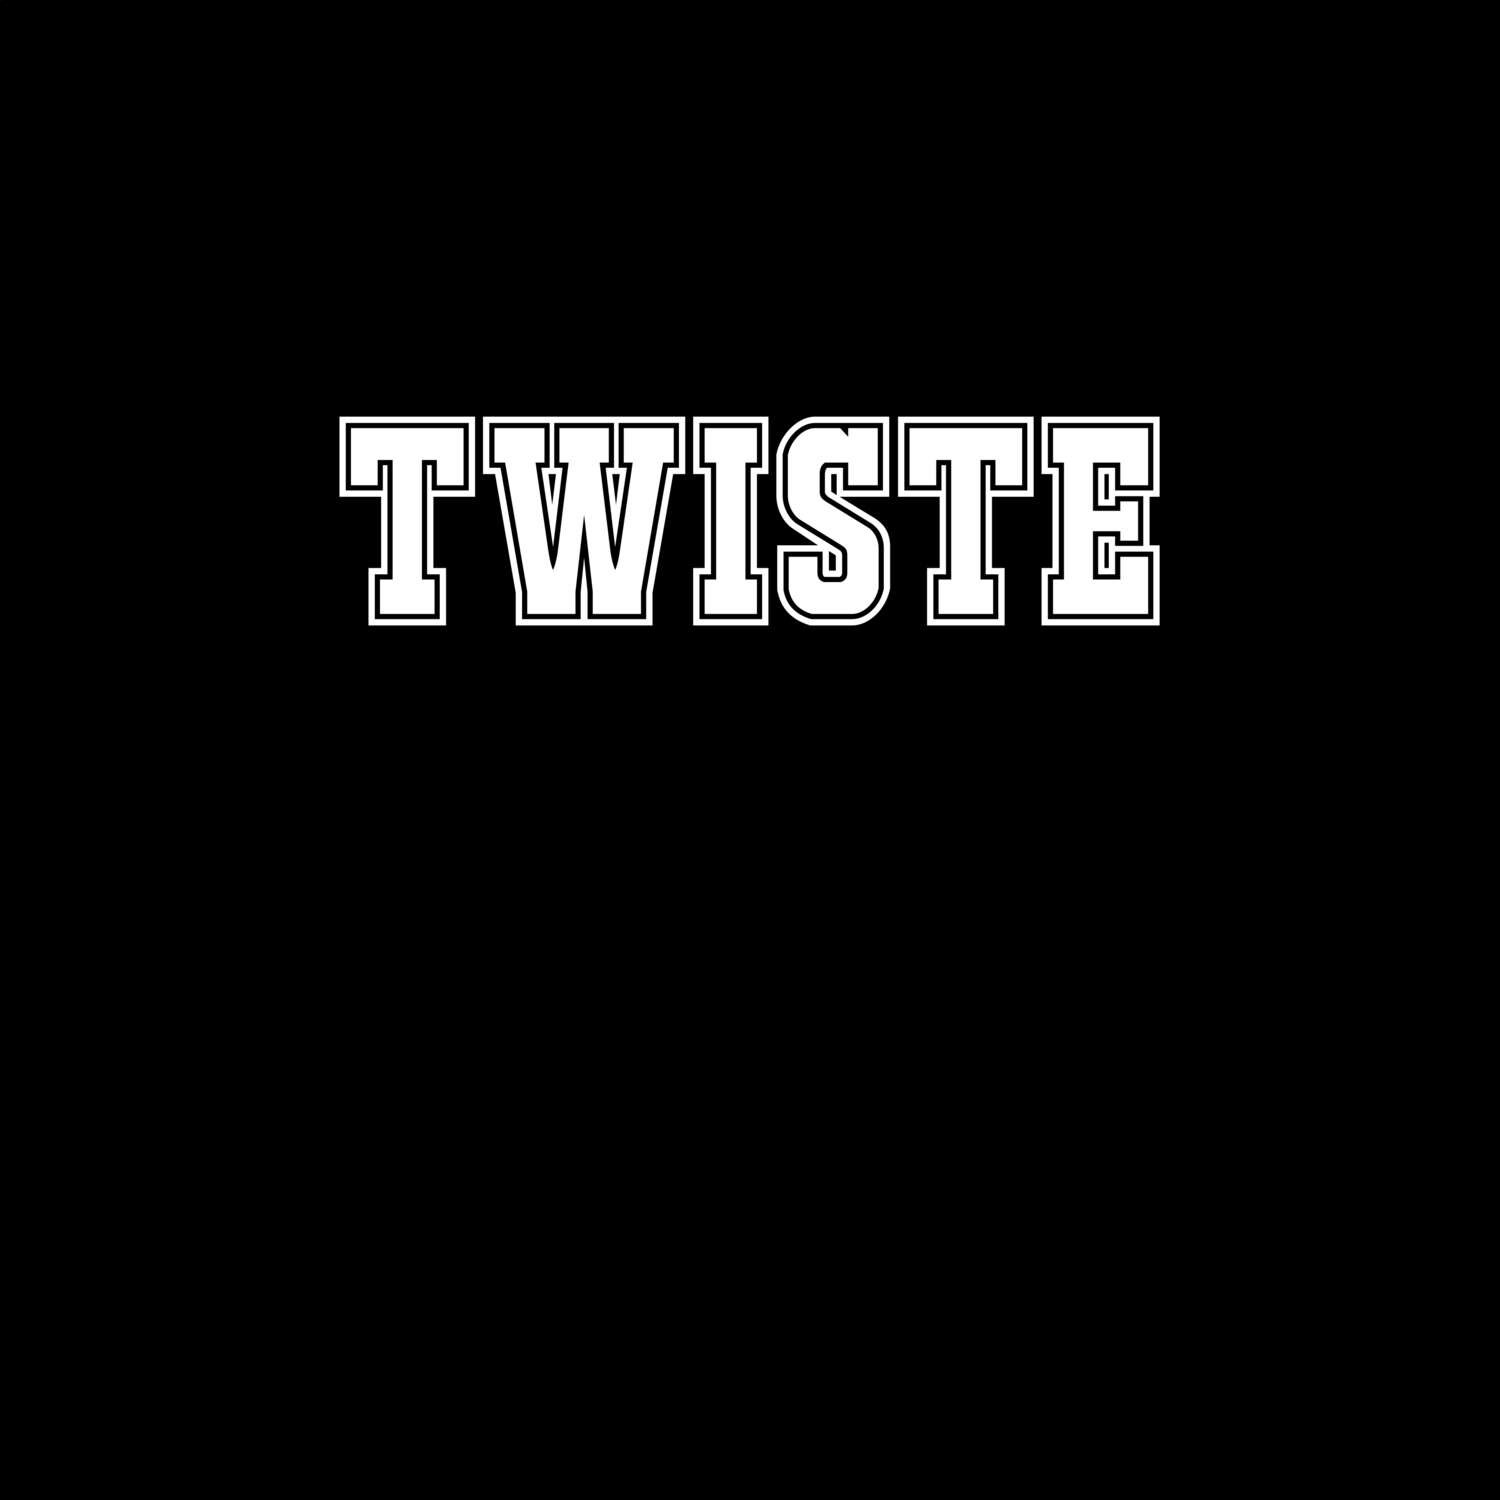 Twiste T-Shirt »Classic«